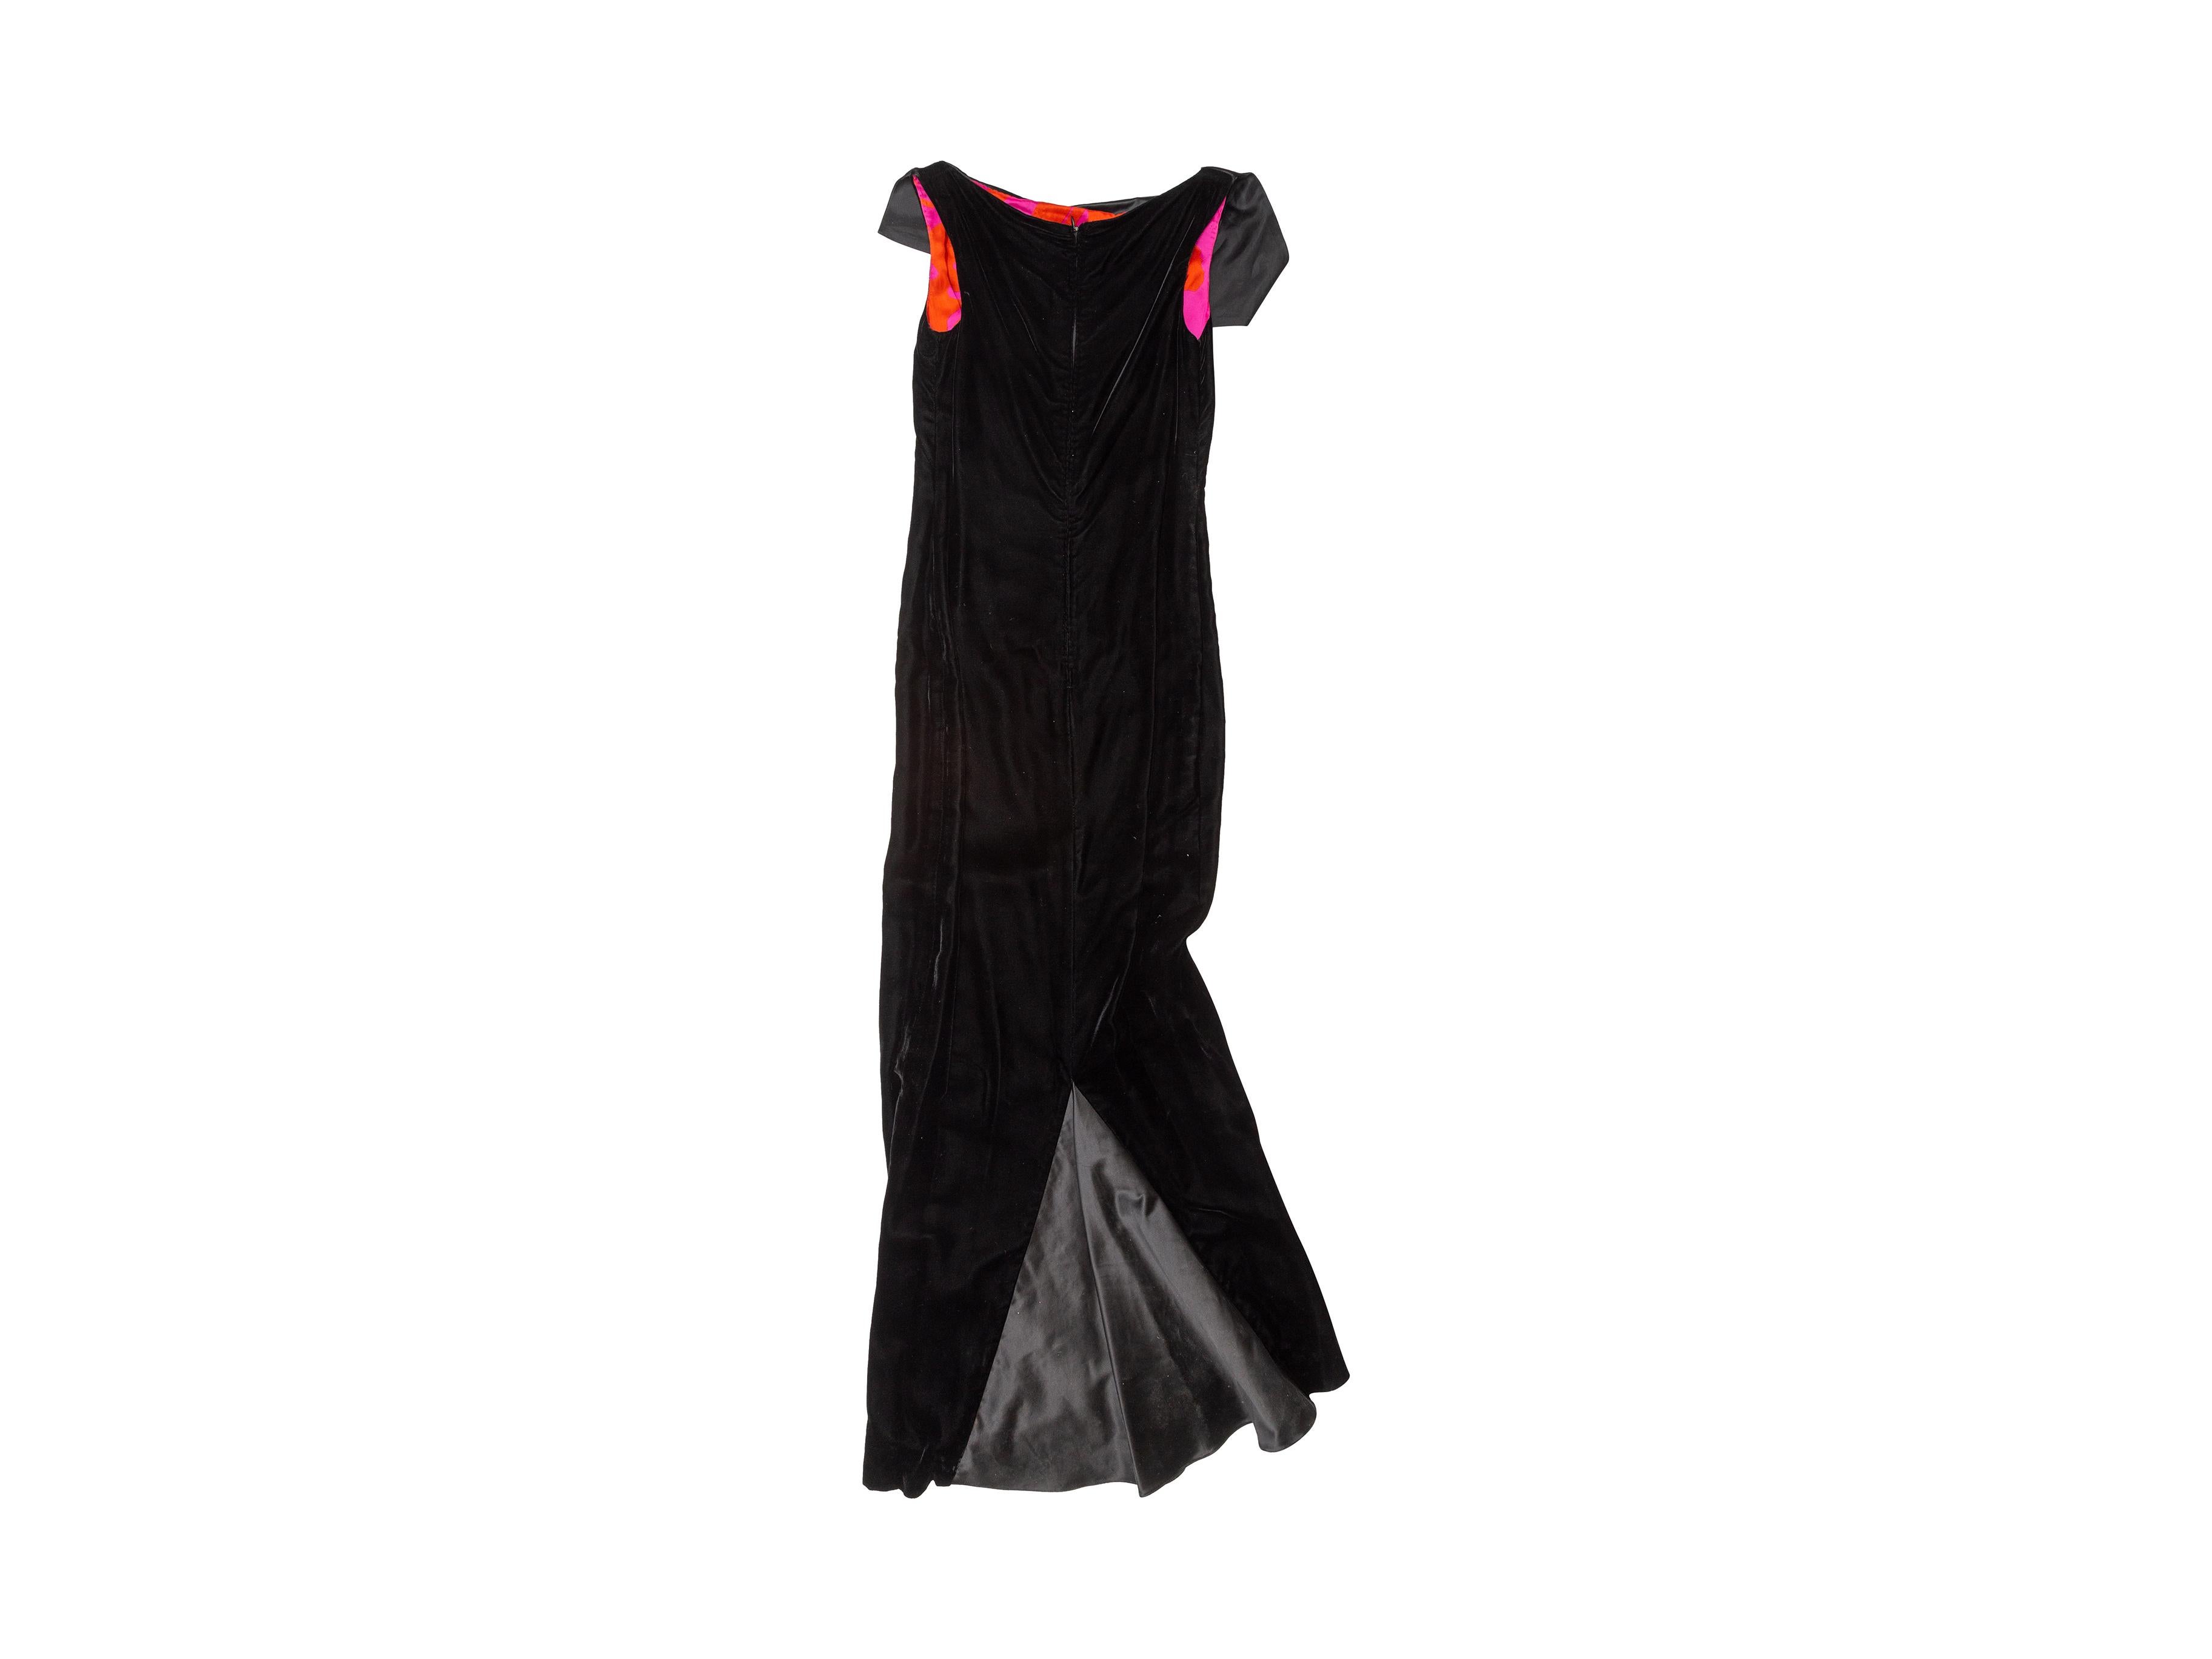 Product details: Black velvet off-the-shoulder evening gown by Christian Lacroix. Tonal satin trim. Vent at back hem. Zip closure at center back. 32